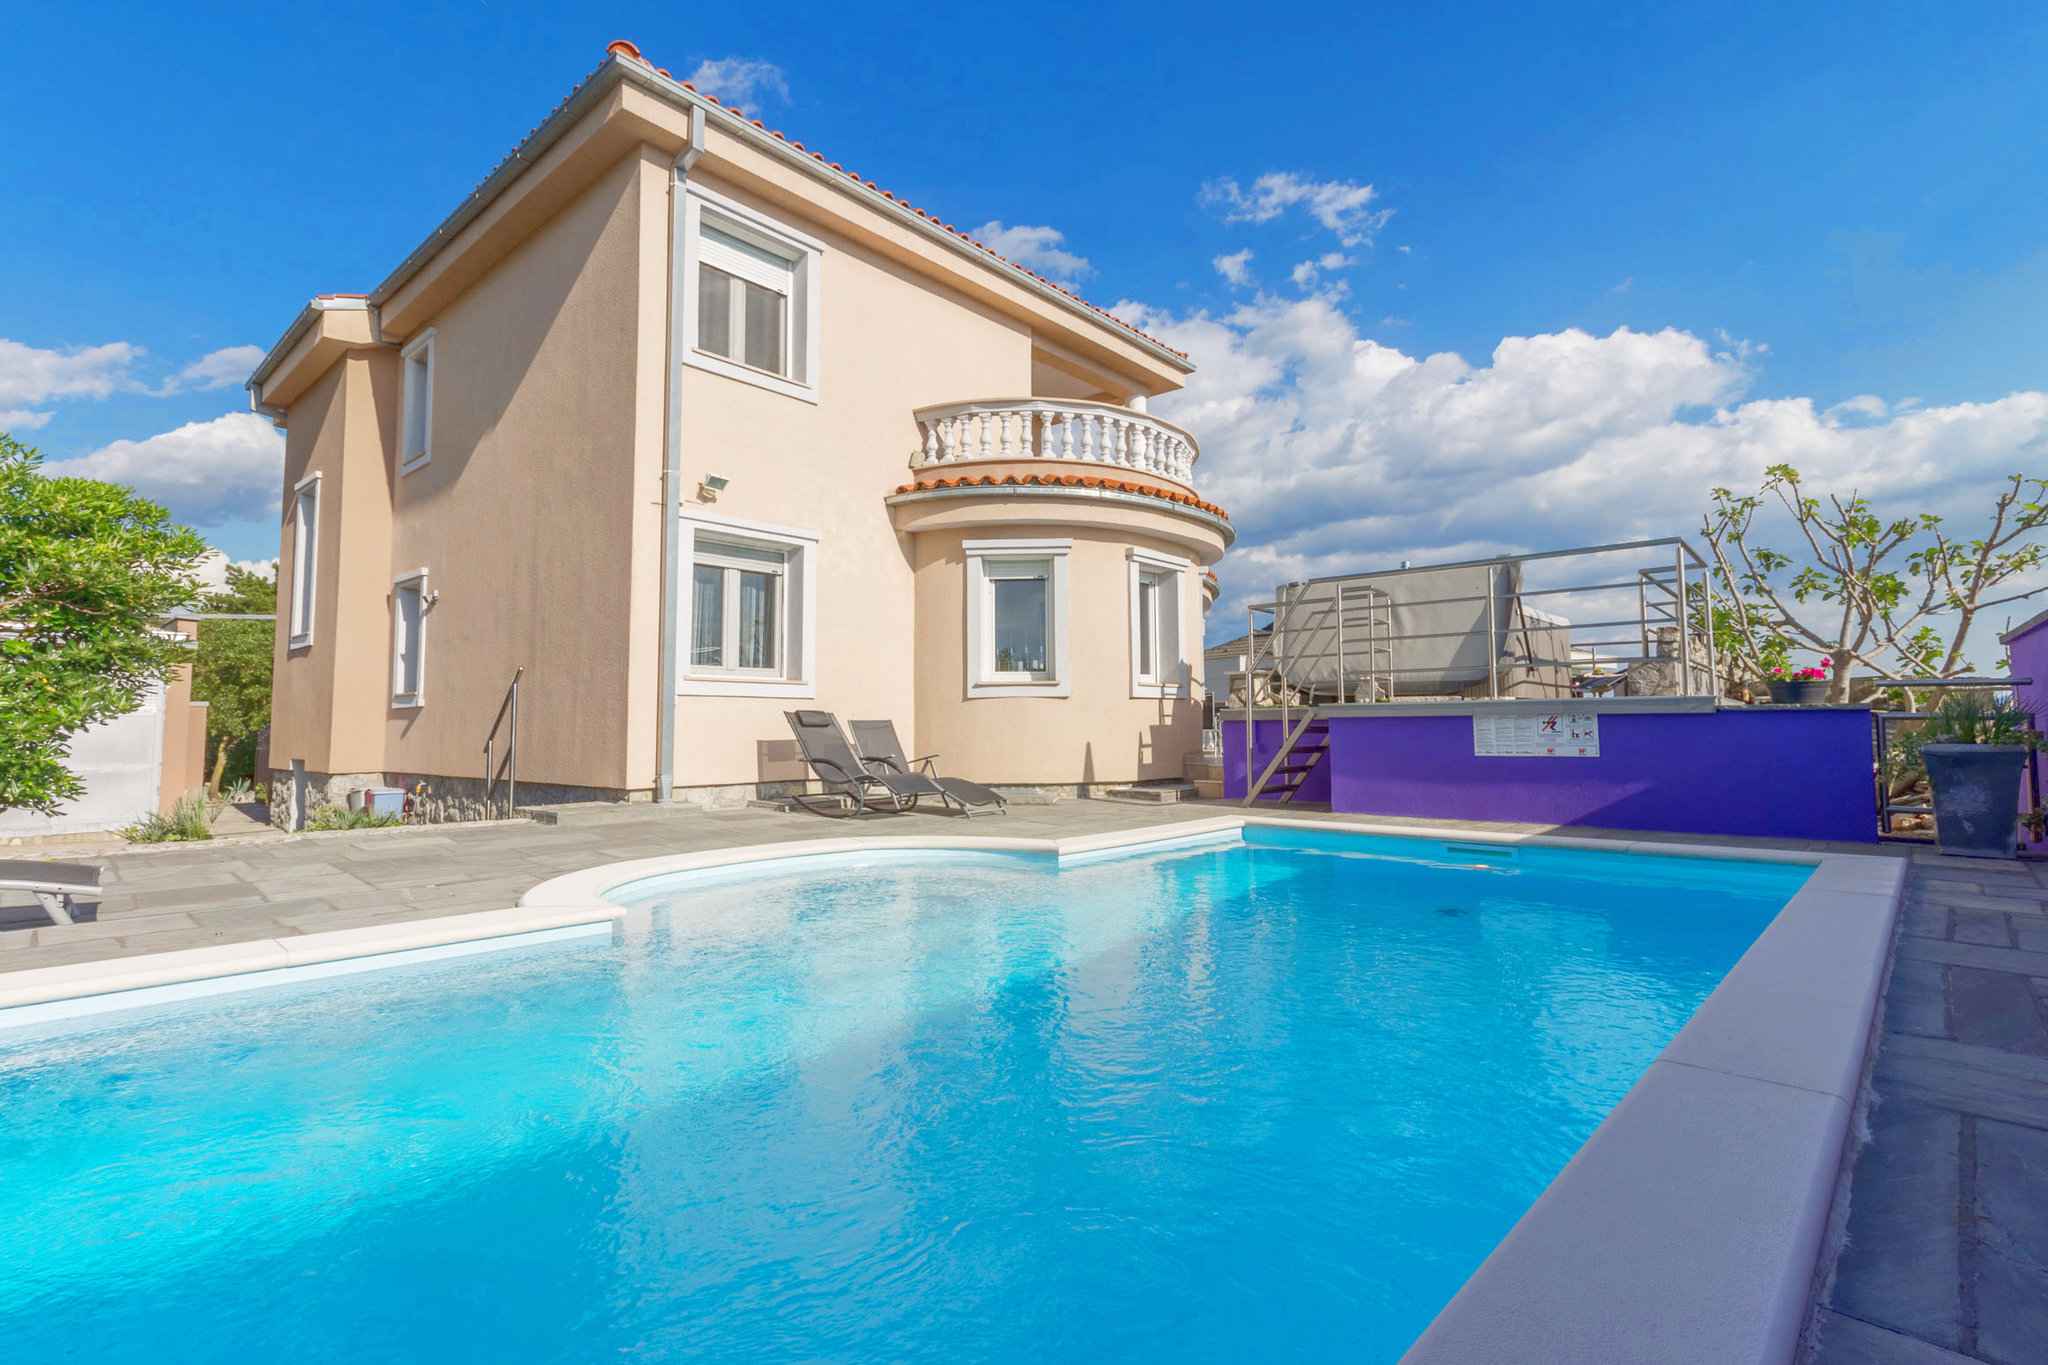 Villa mit Swimmingpool und Whirlpool Ferienhaus in Kroatien